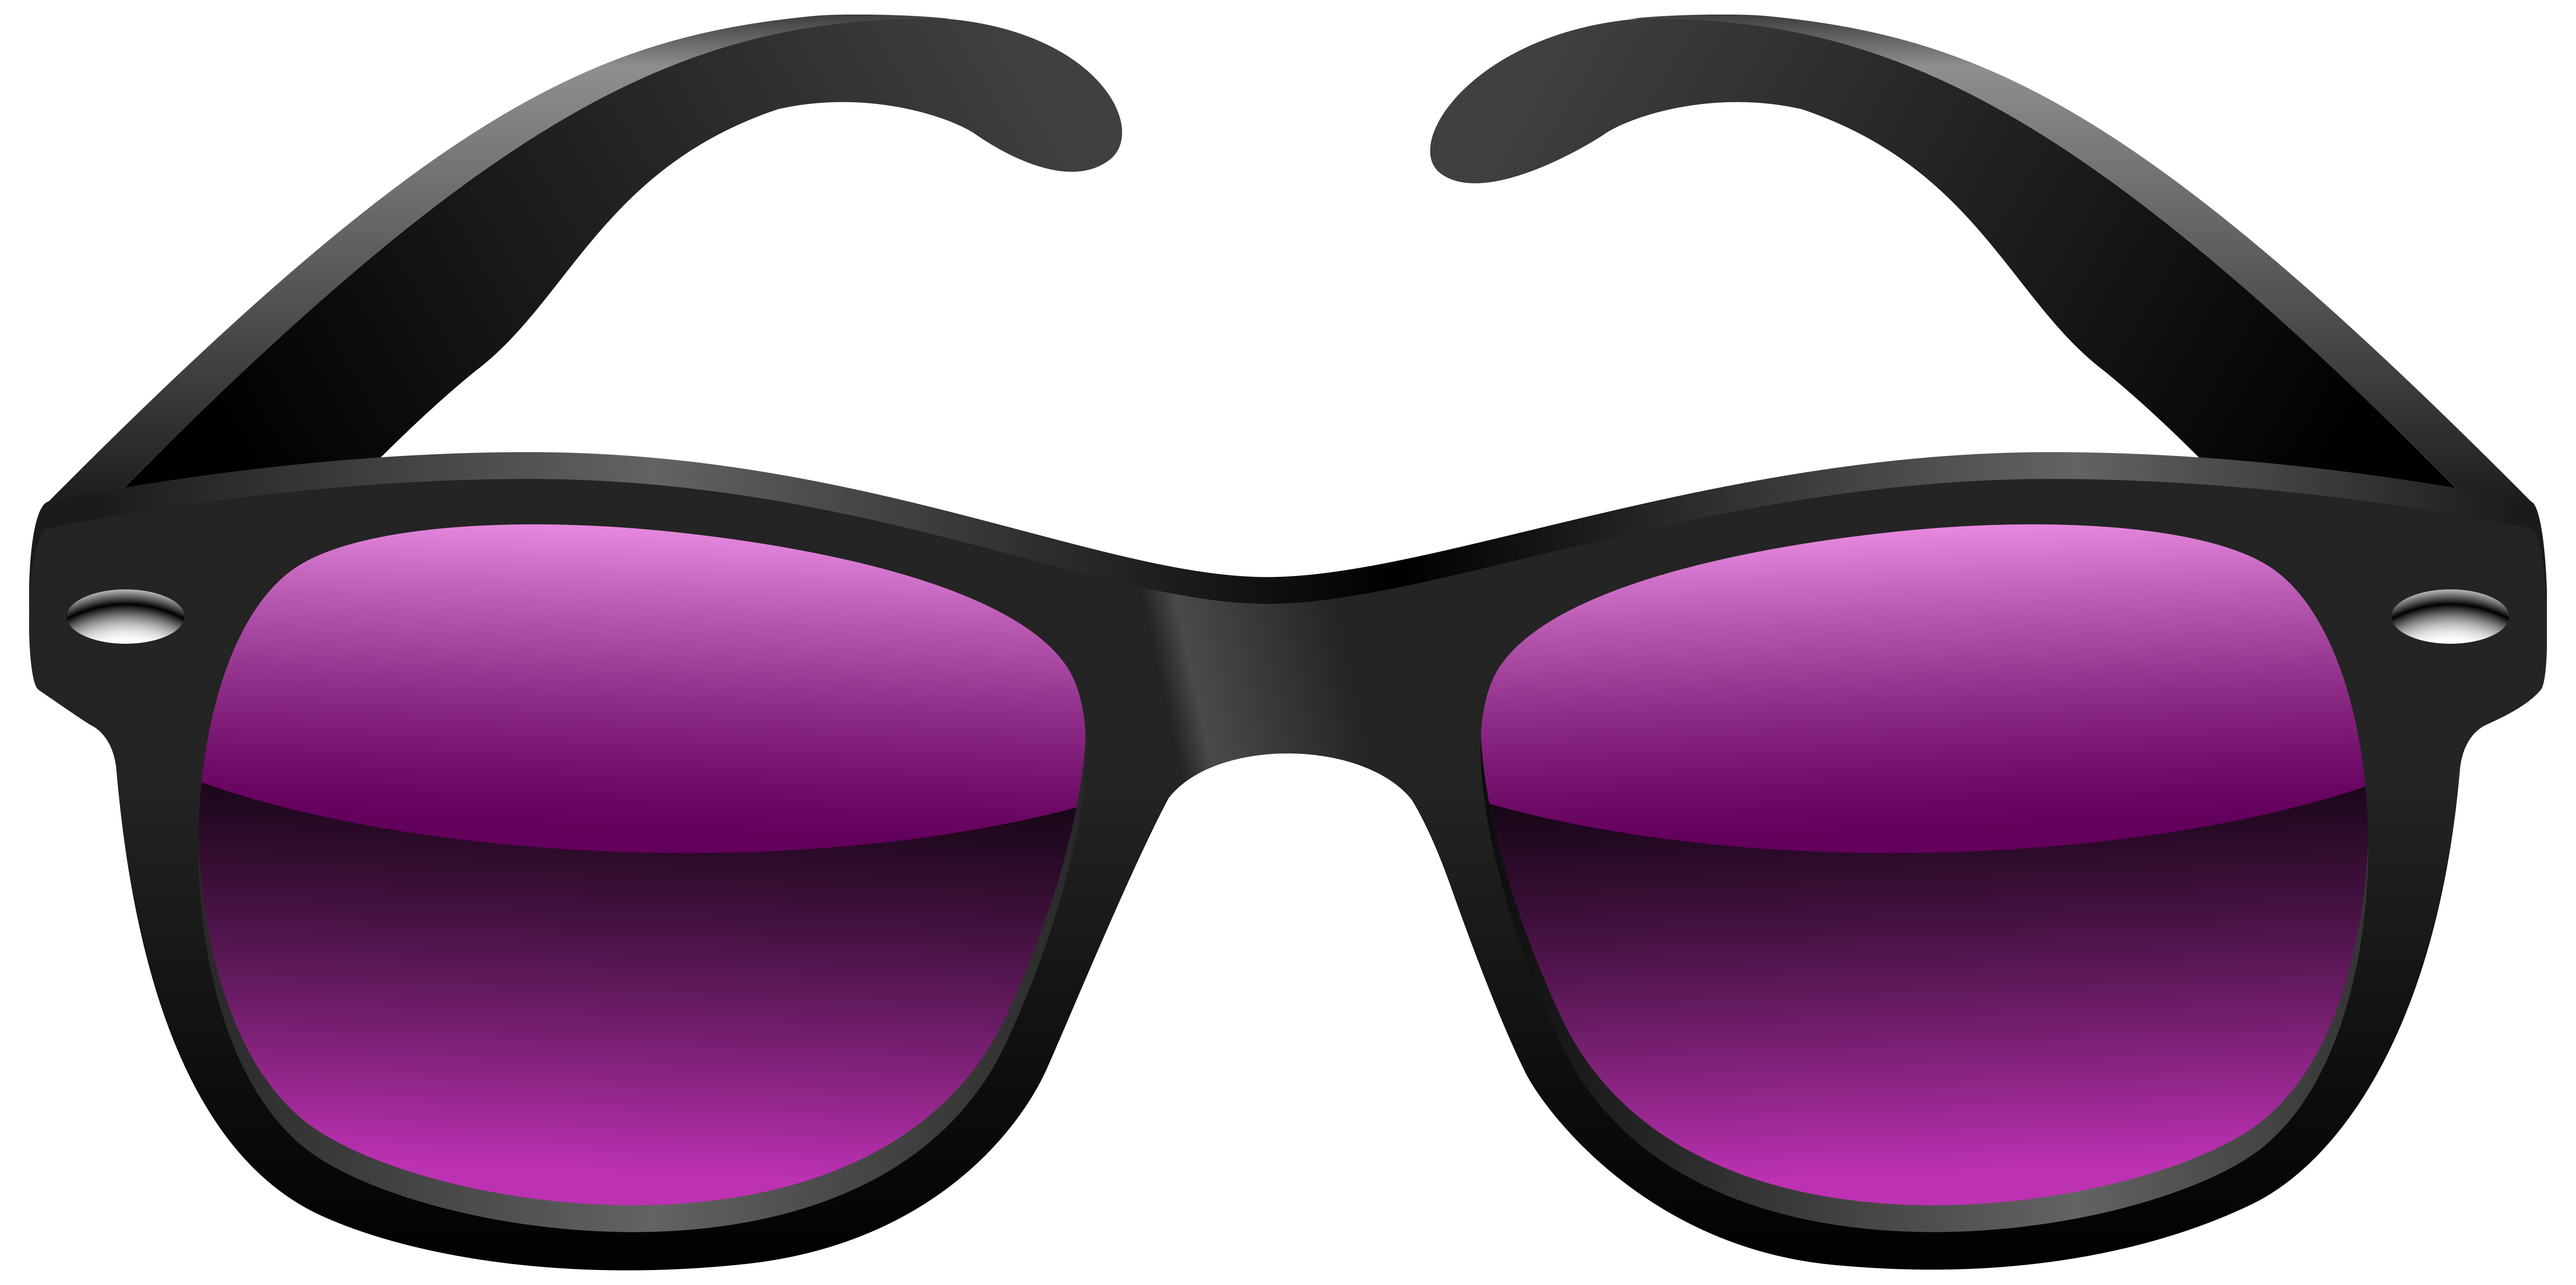 Black and purple sunglasses clipart image